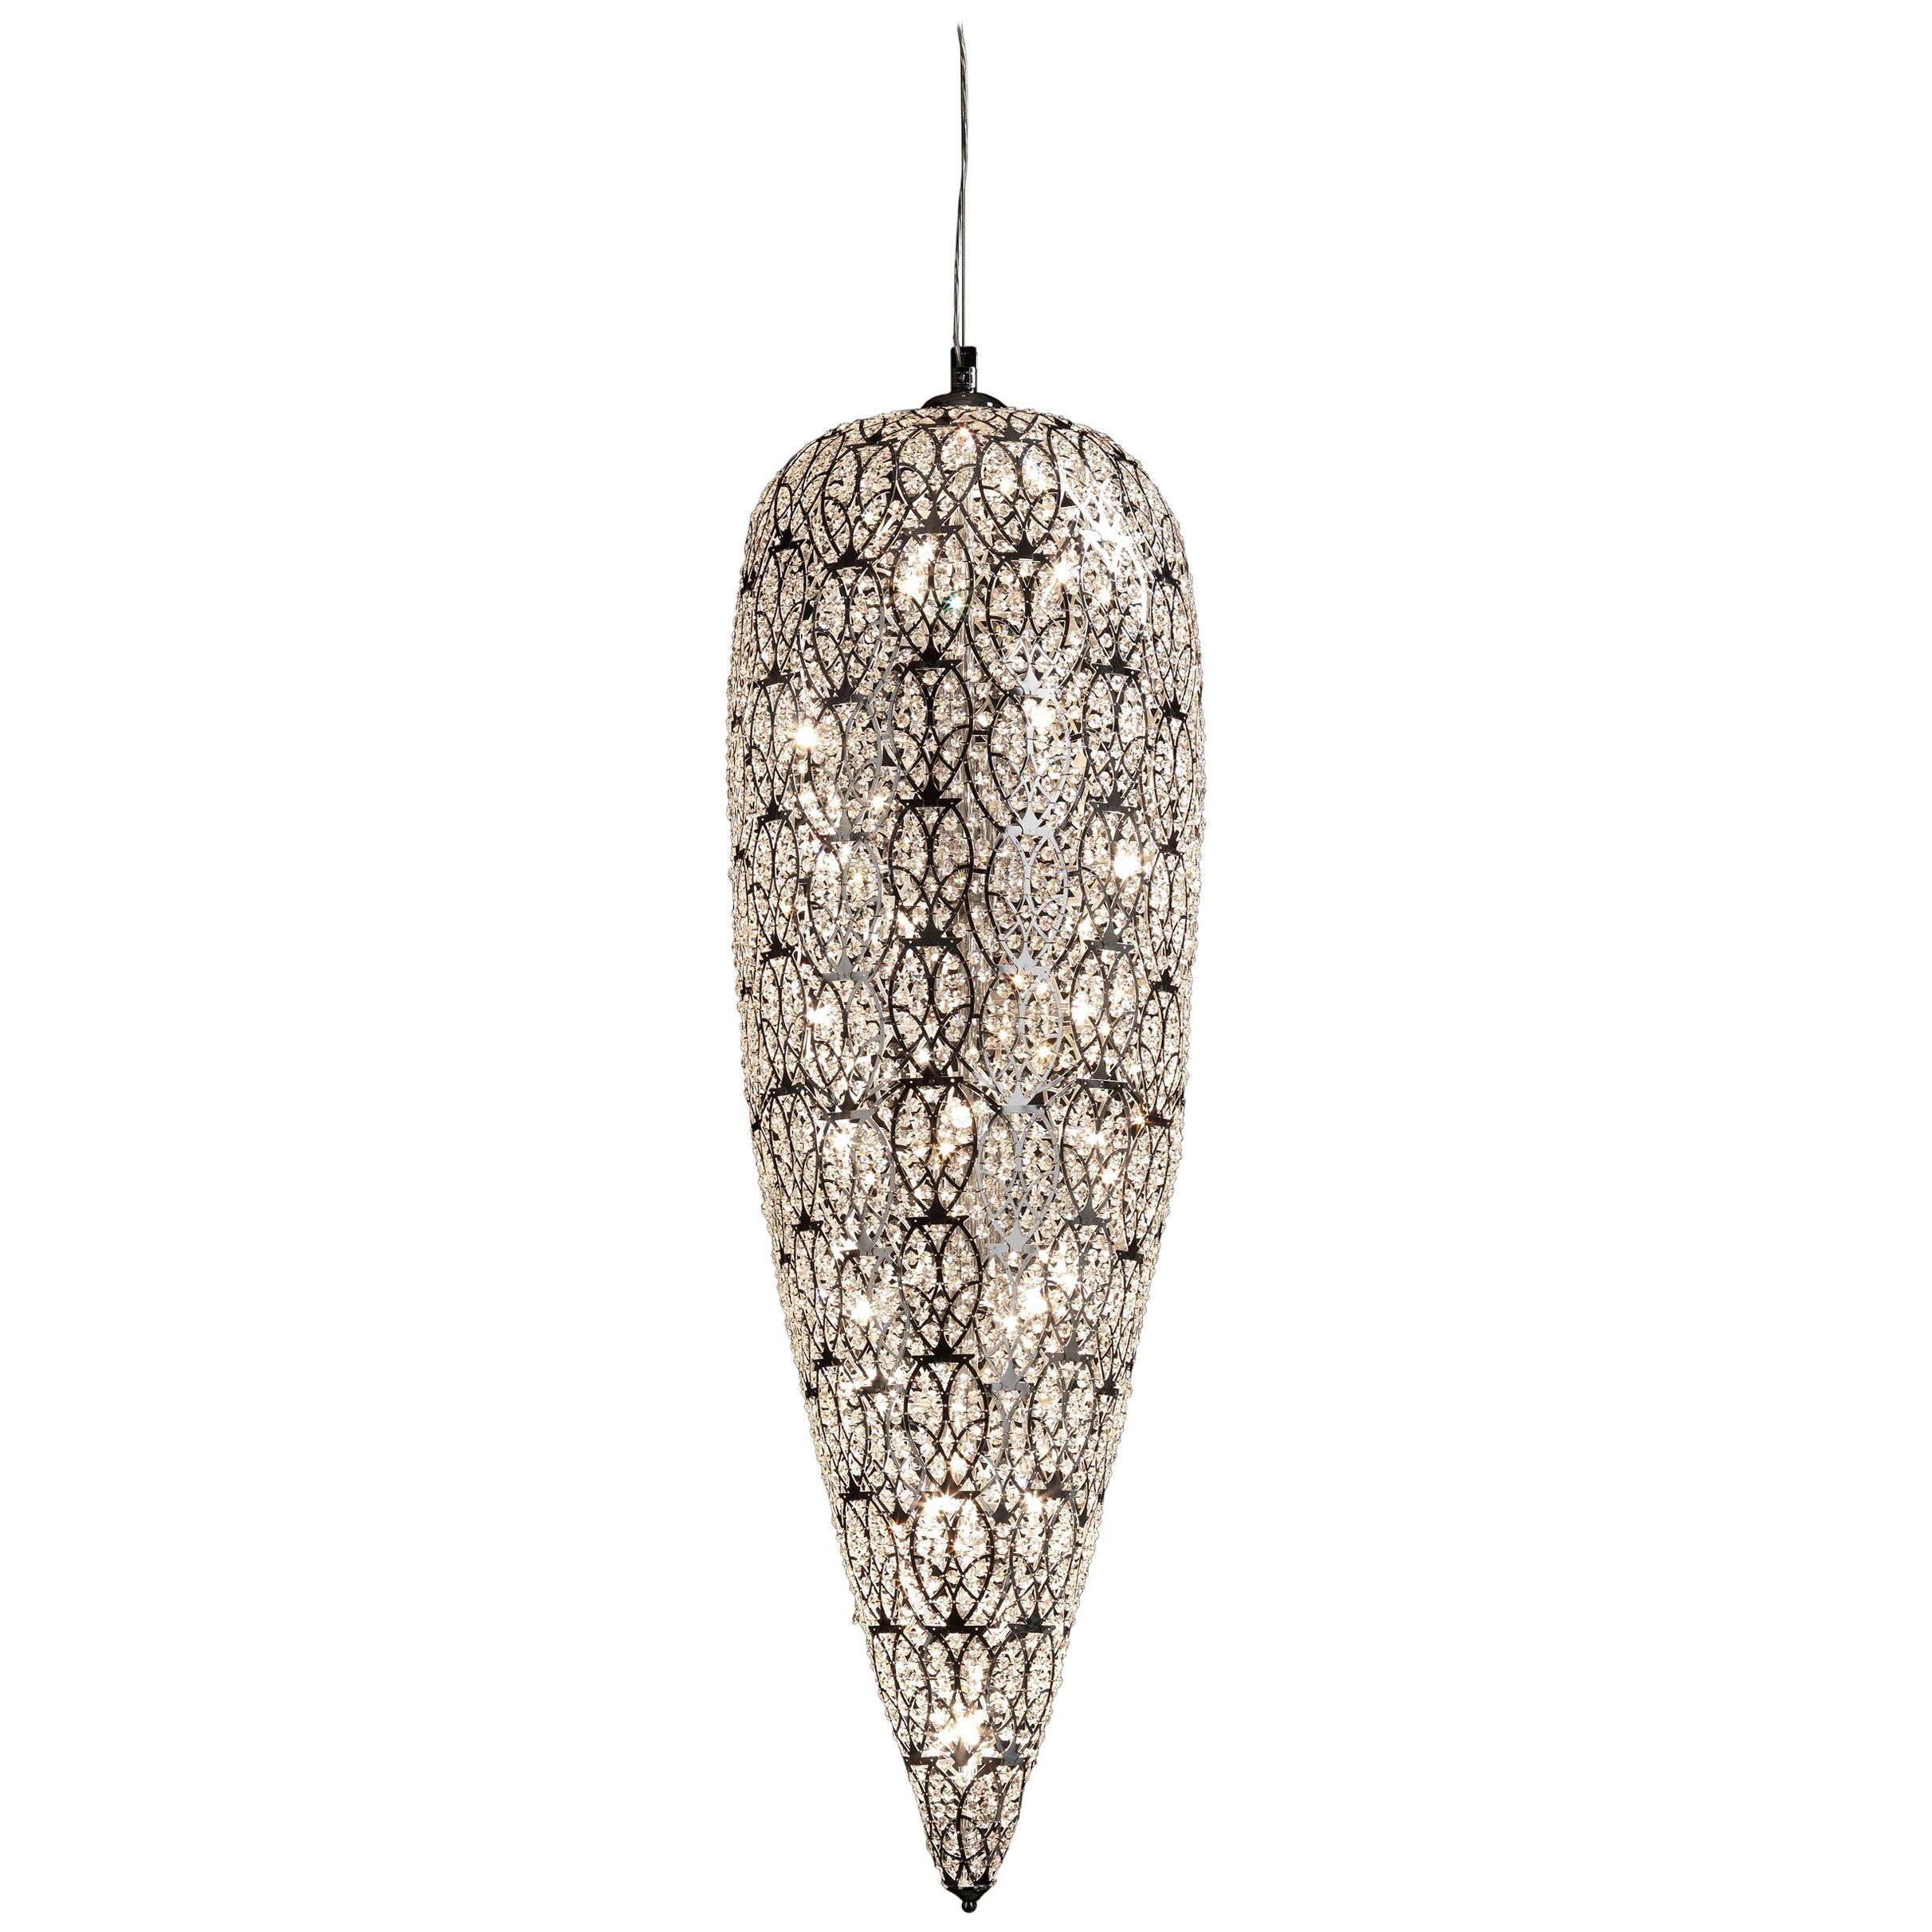 Big Sensation Pendant Lamp, Chrome Finish, Arabesque Style, Italy